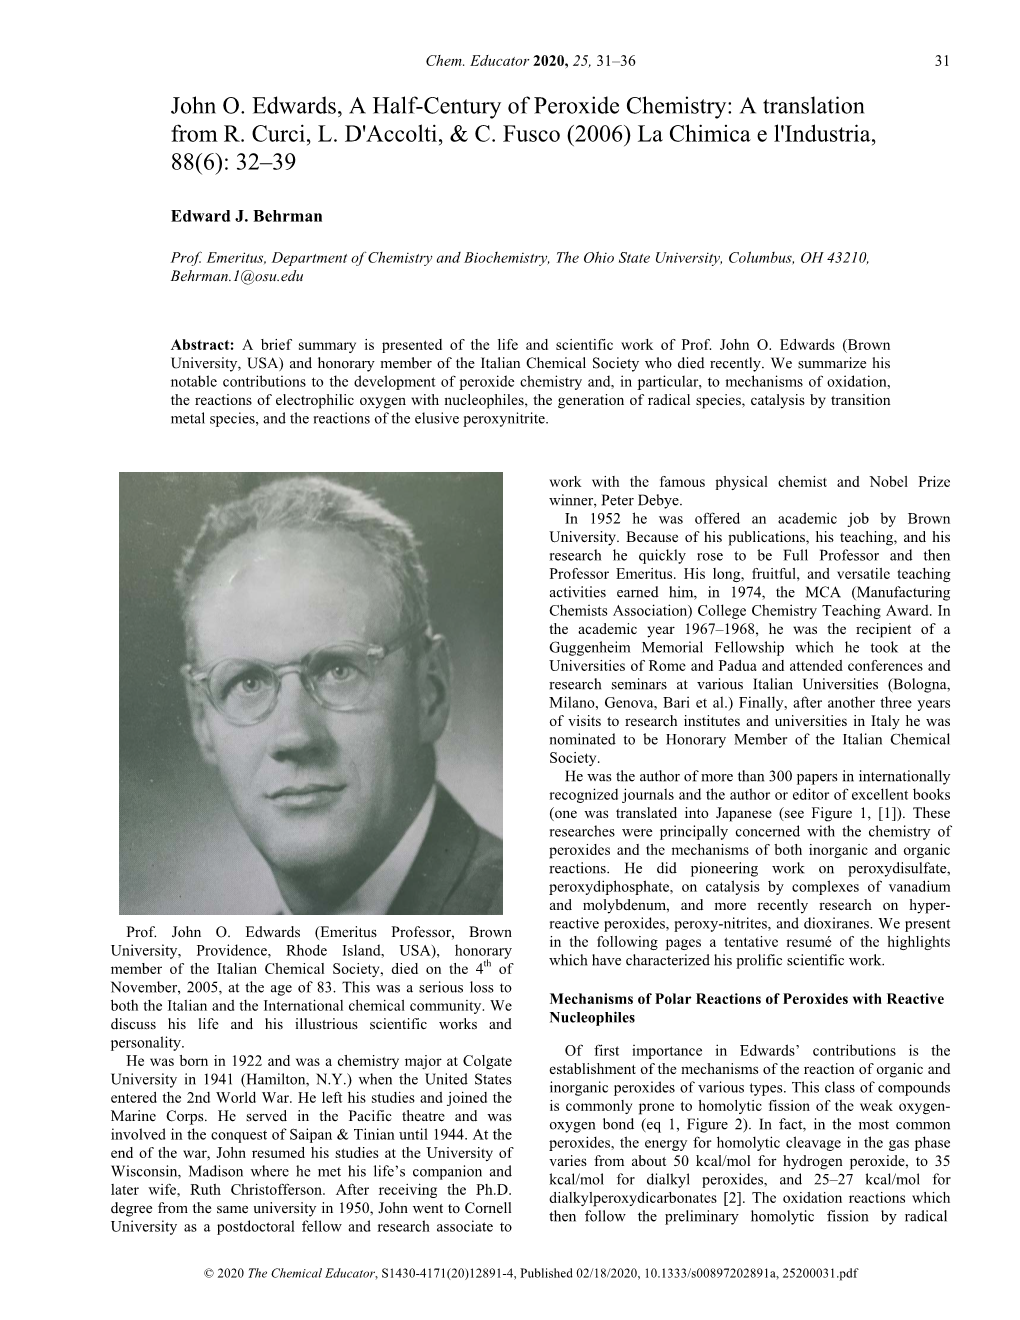 John O. Edwards, a Half-Century of Peroxide Chemistry: a Translation from R